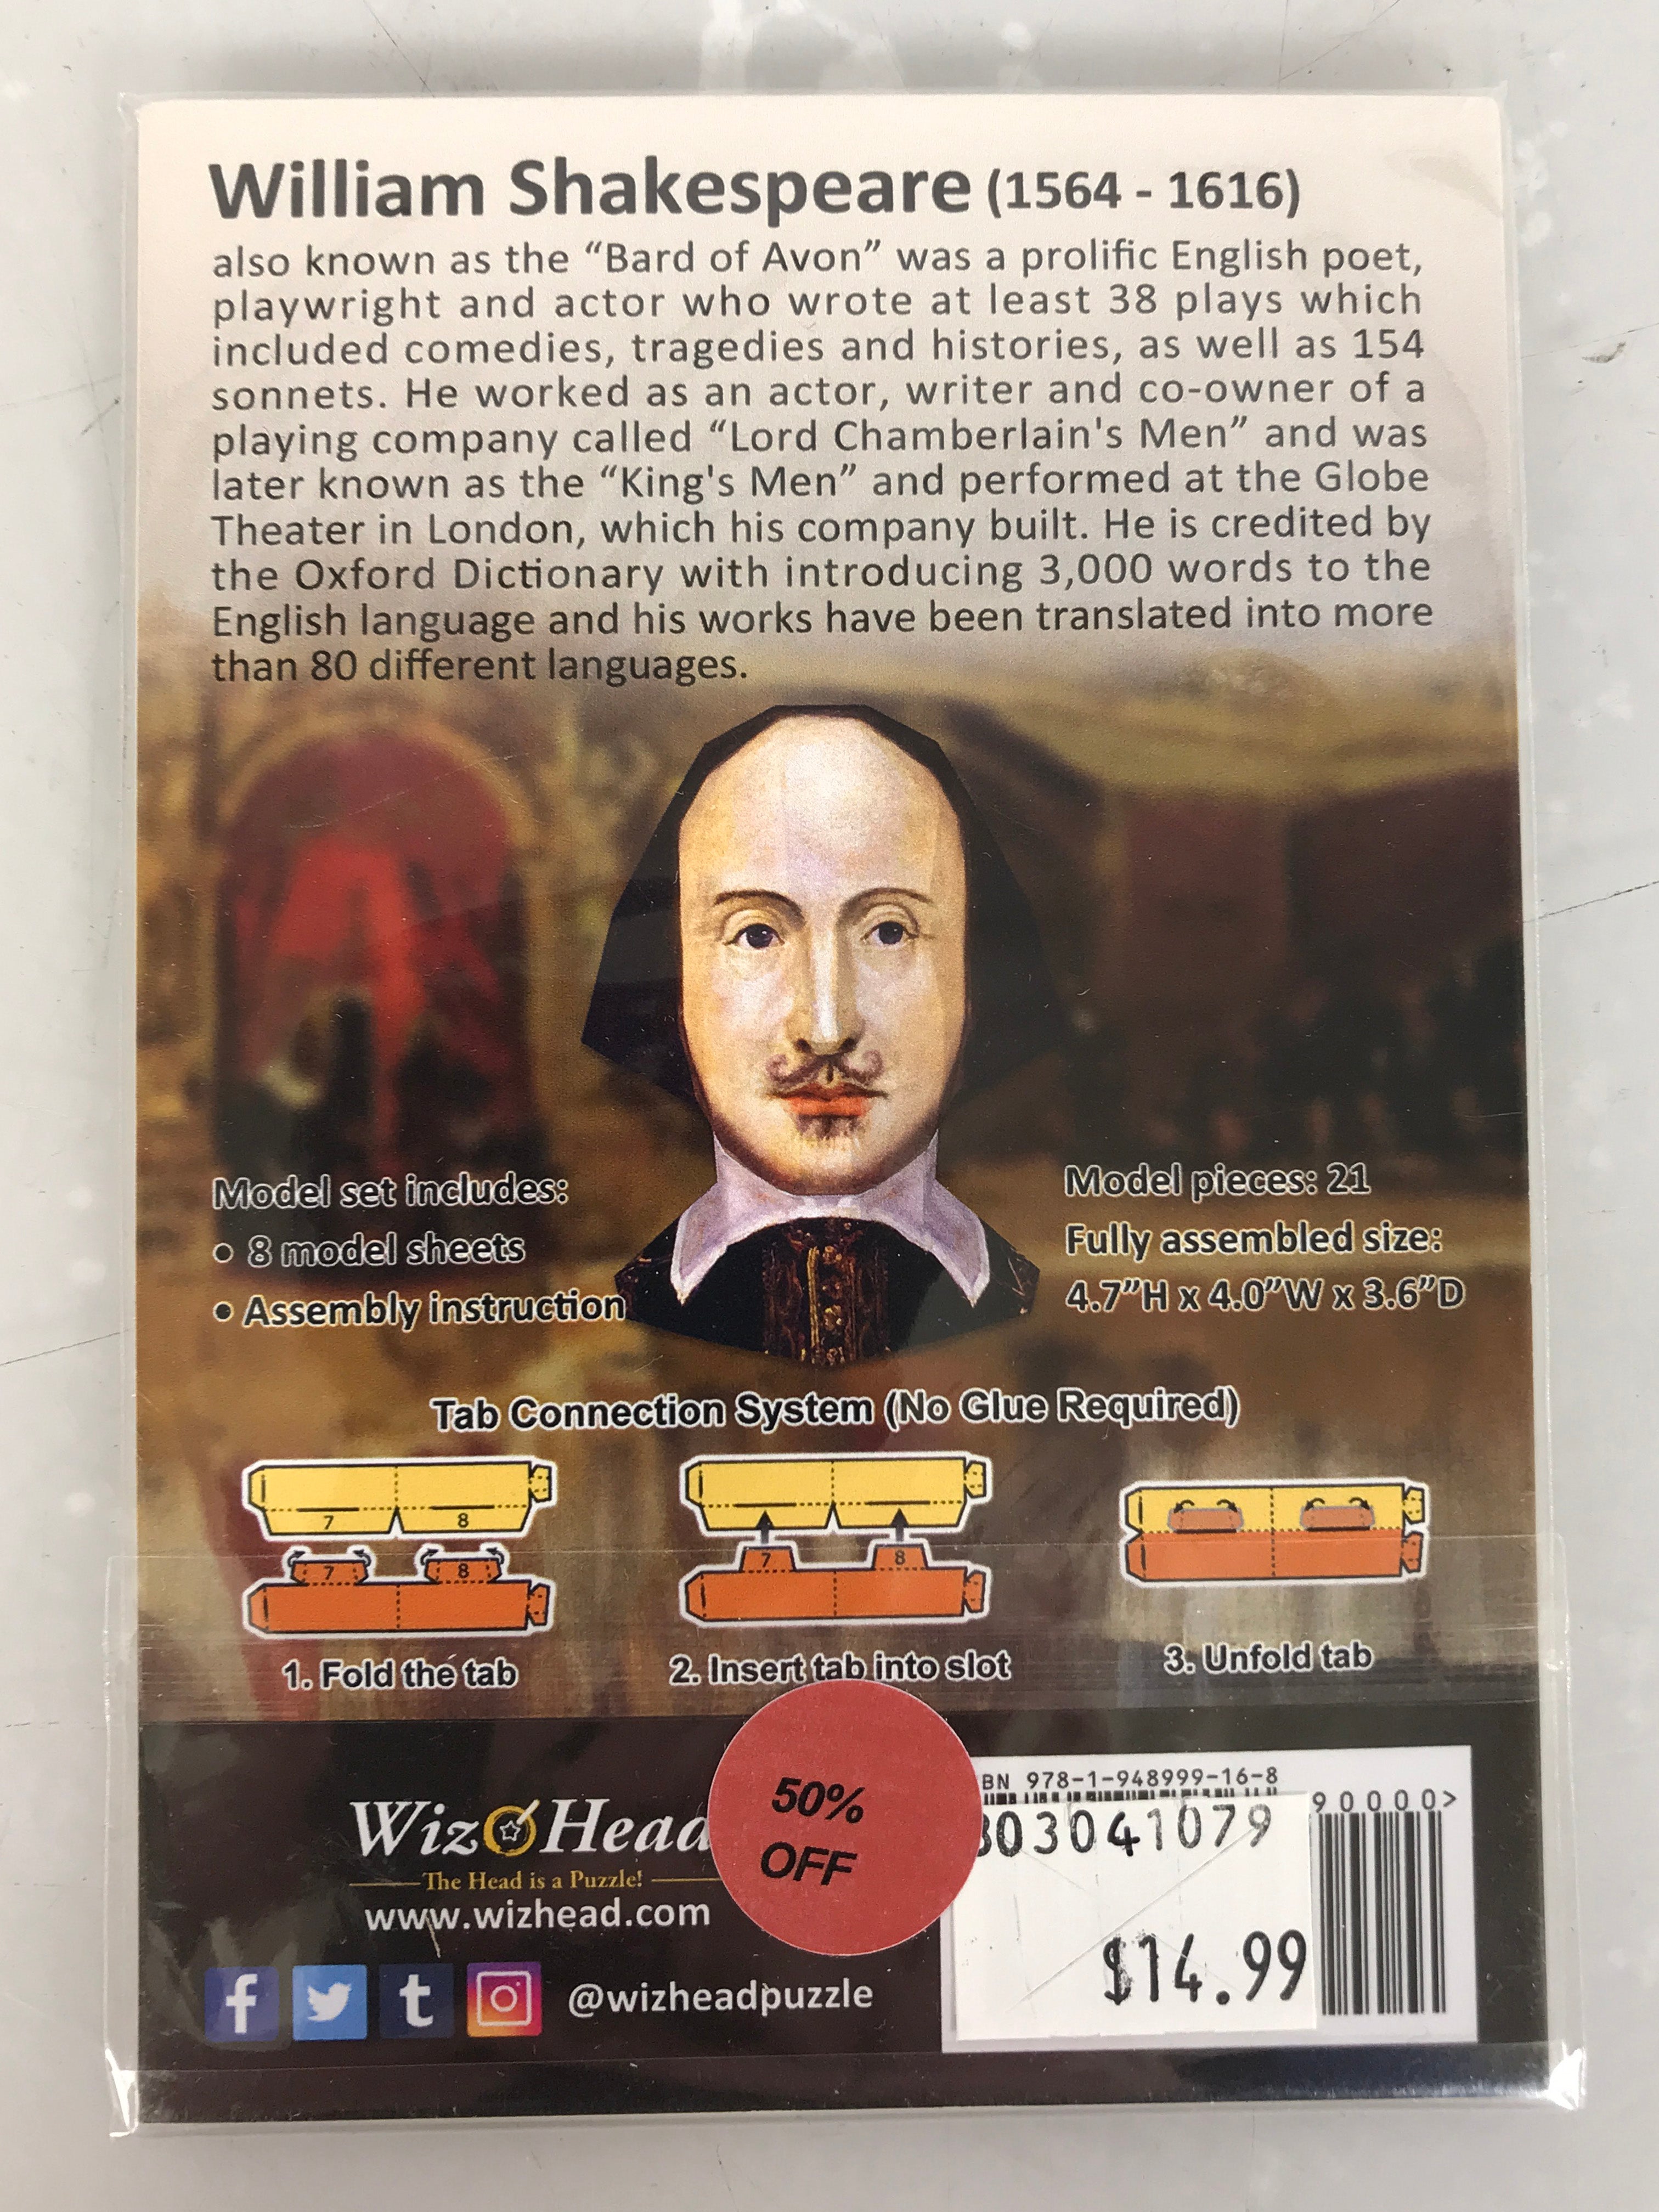 WizHead William Shakespeare Paper Craft Model Puzzle